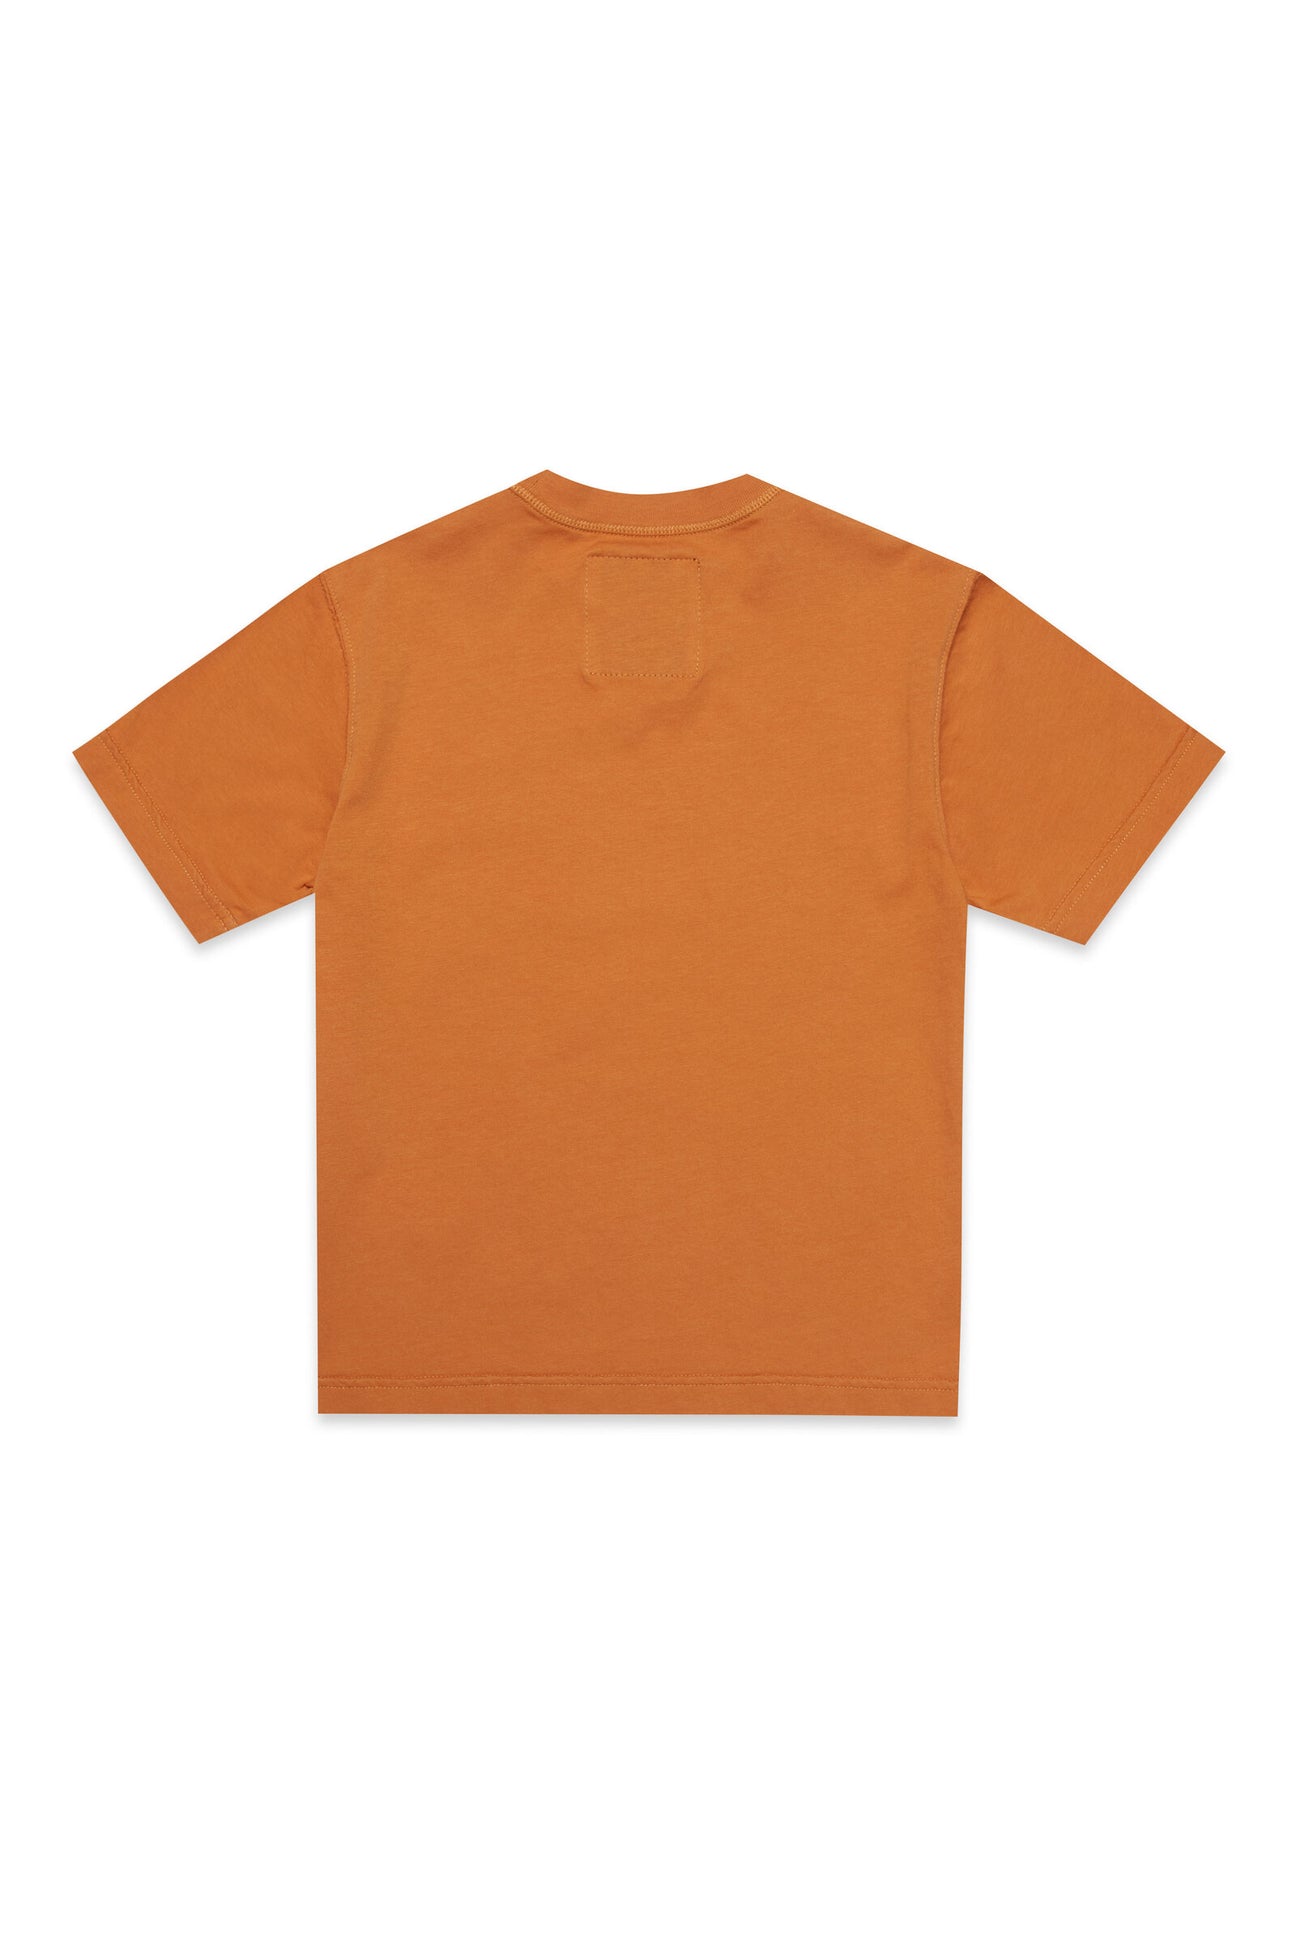 Deadstock orange crewneck T-shirt with digital print Sloowly Deadstock orange crewneck T-shirt with digital print Sloowly